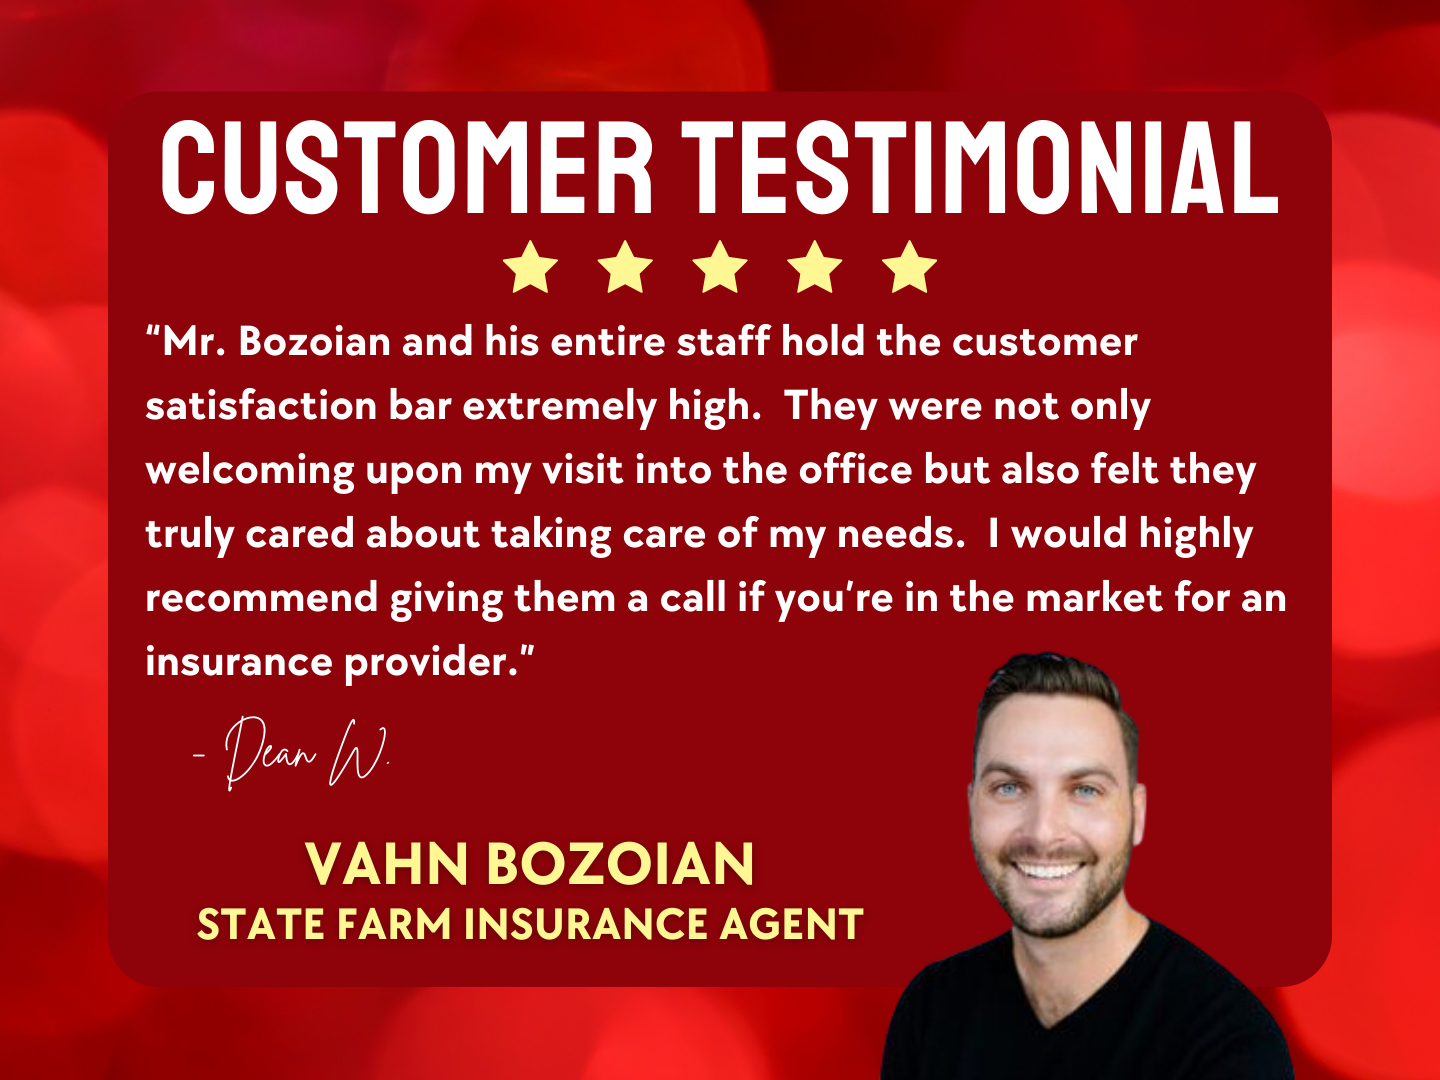 Thank you, Dean! Vahn Bozoian - State Farm Insurance Agent Phoenix (480)648-2928